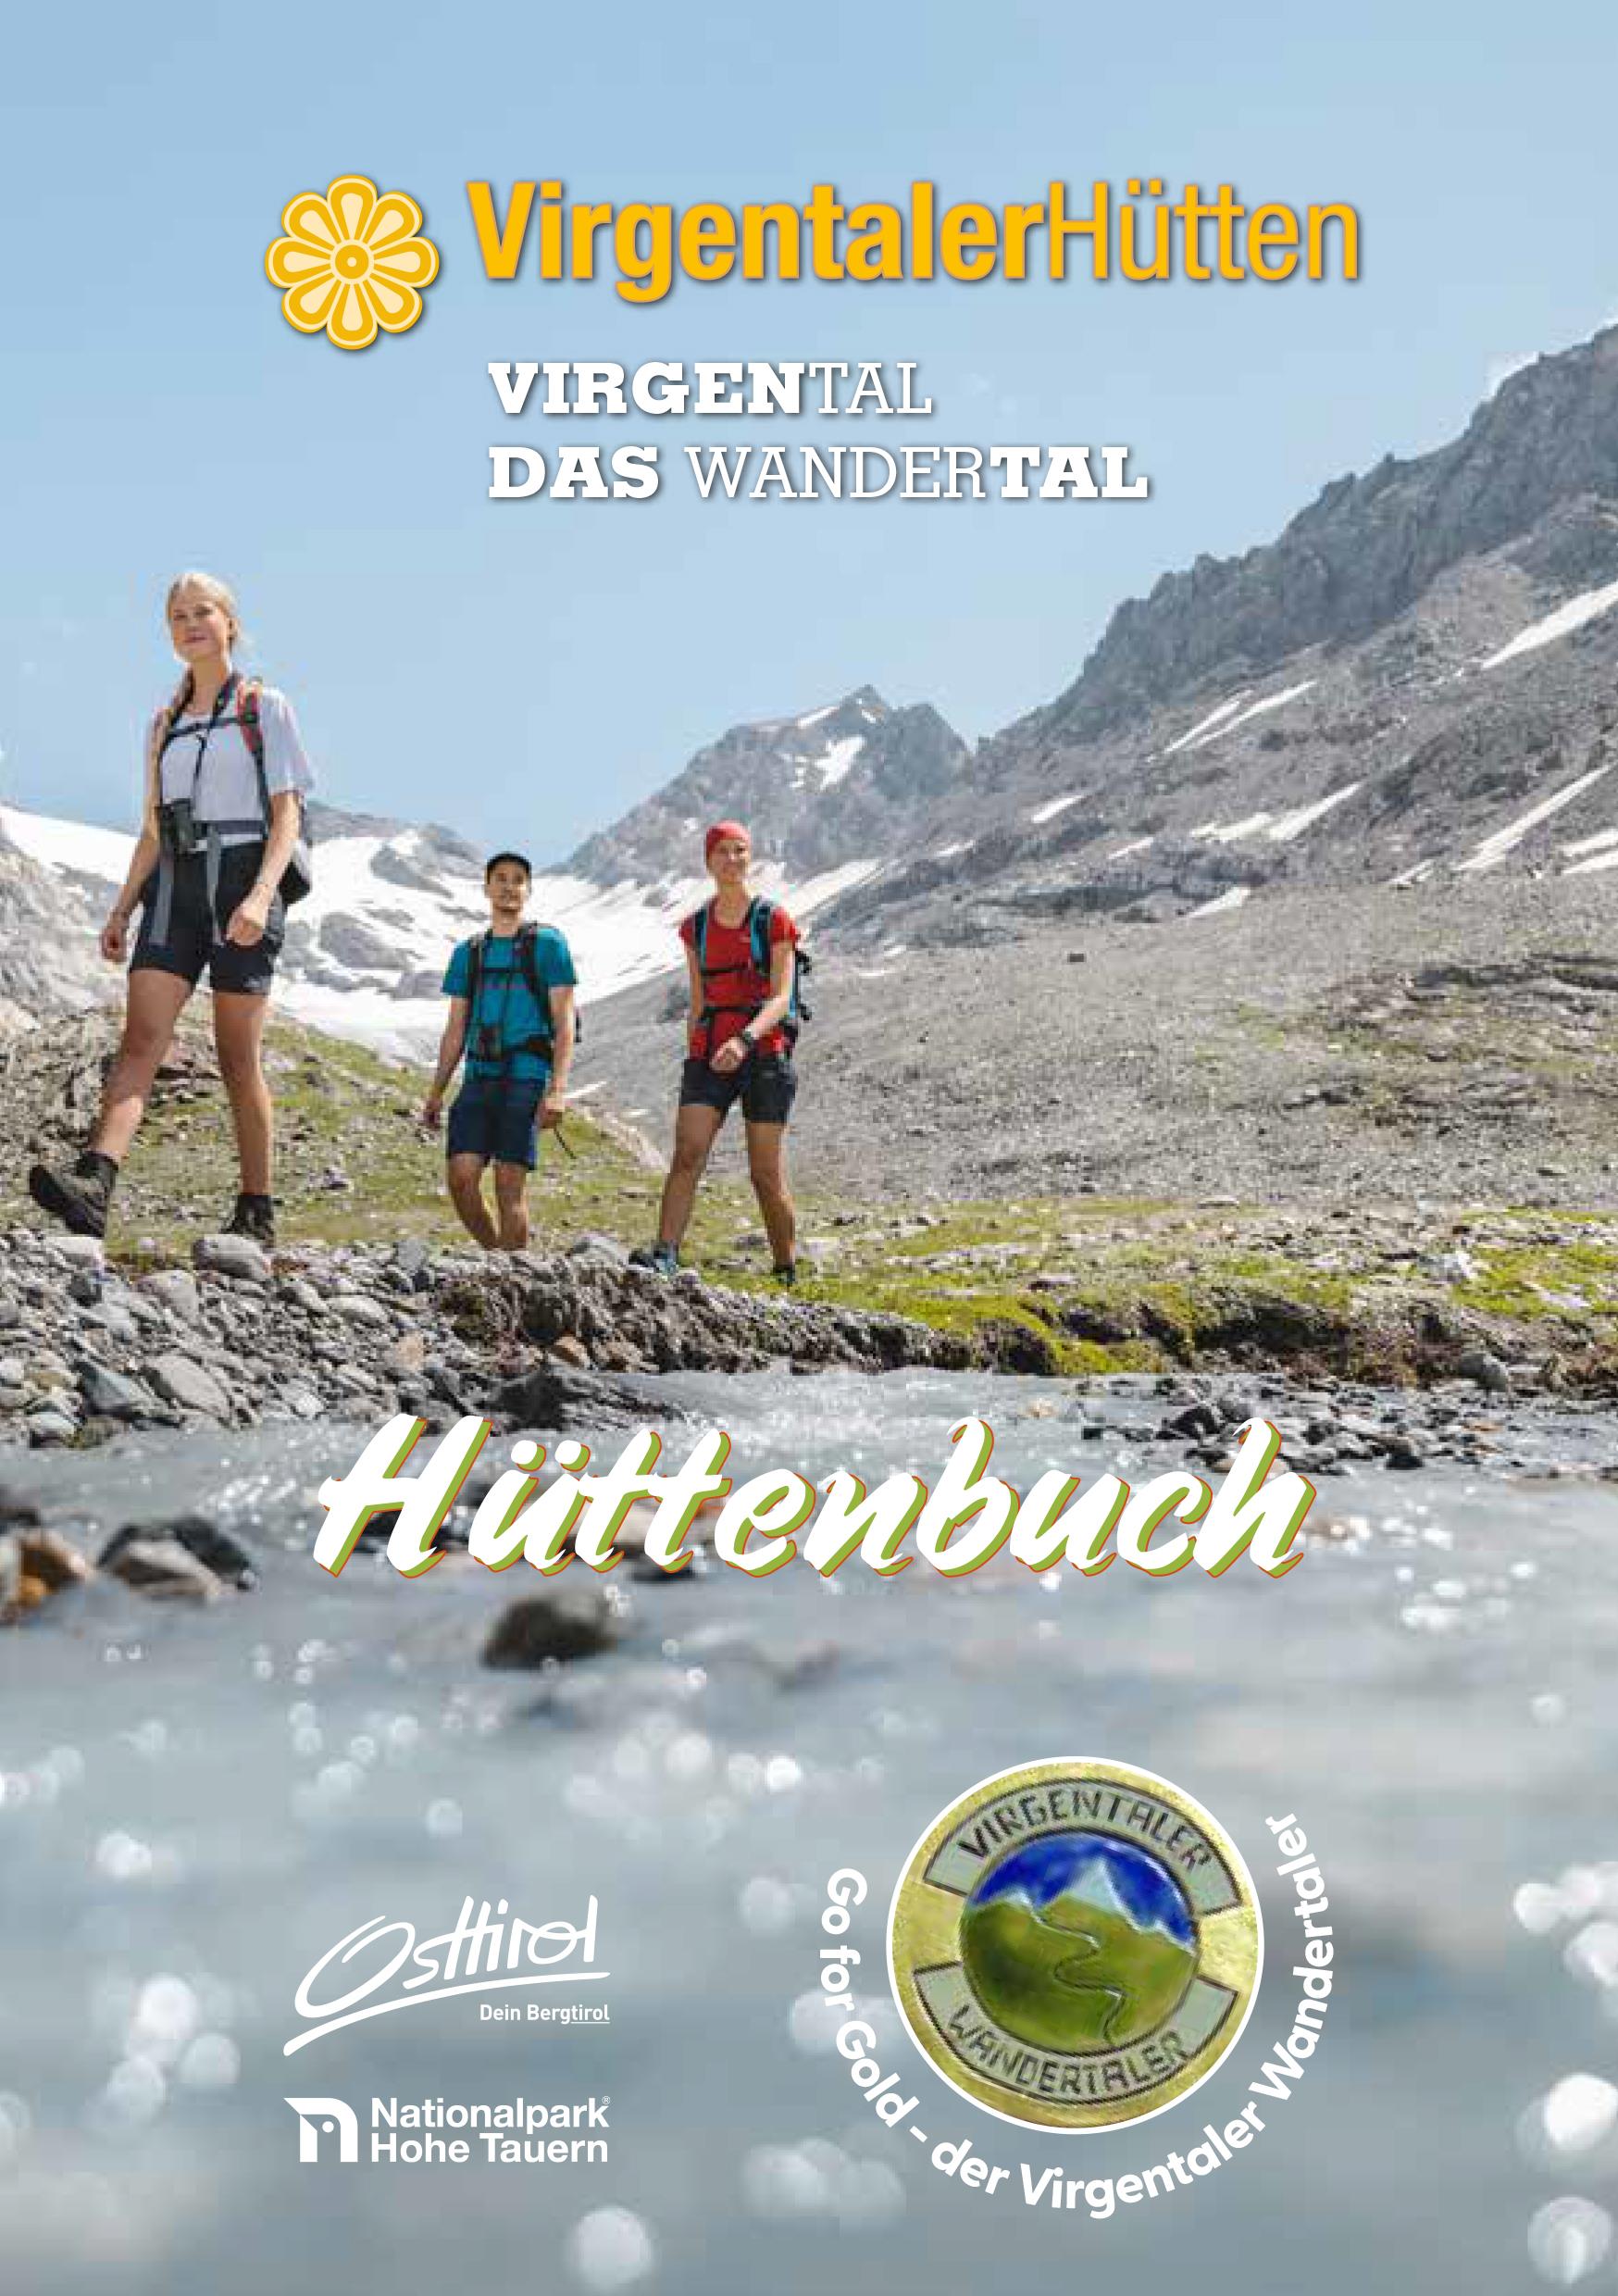 Virgentaler-Huettenbuch.jpg